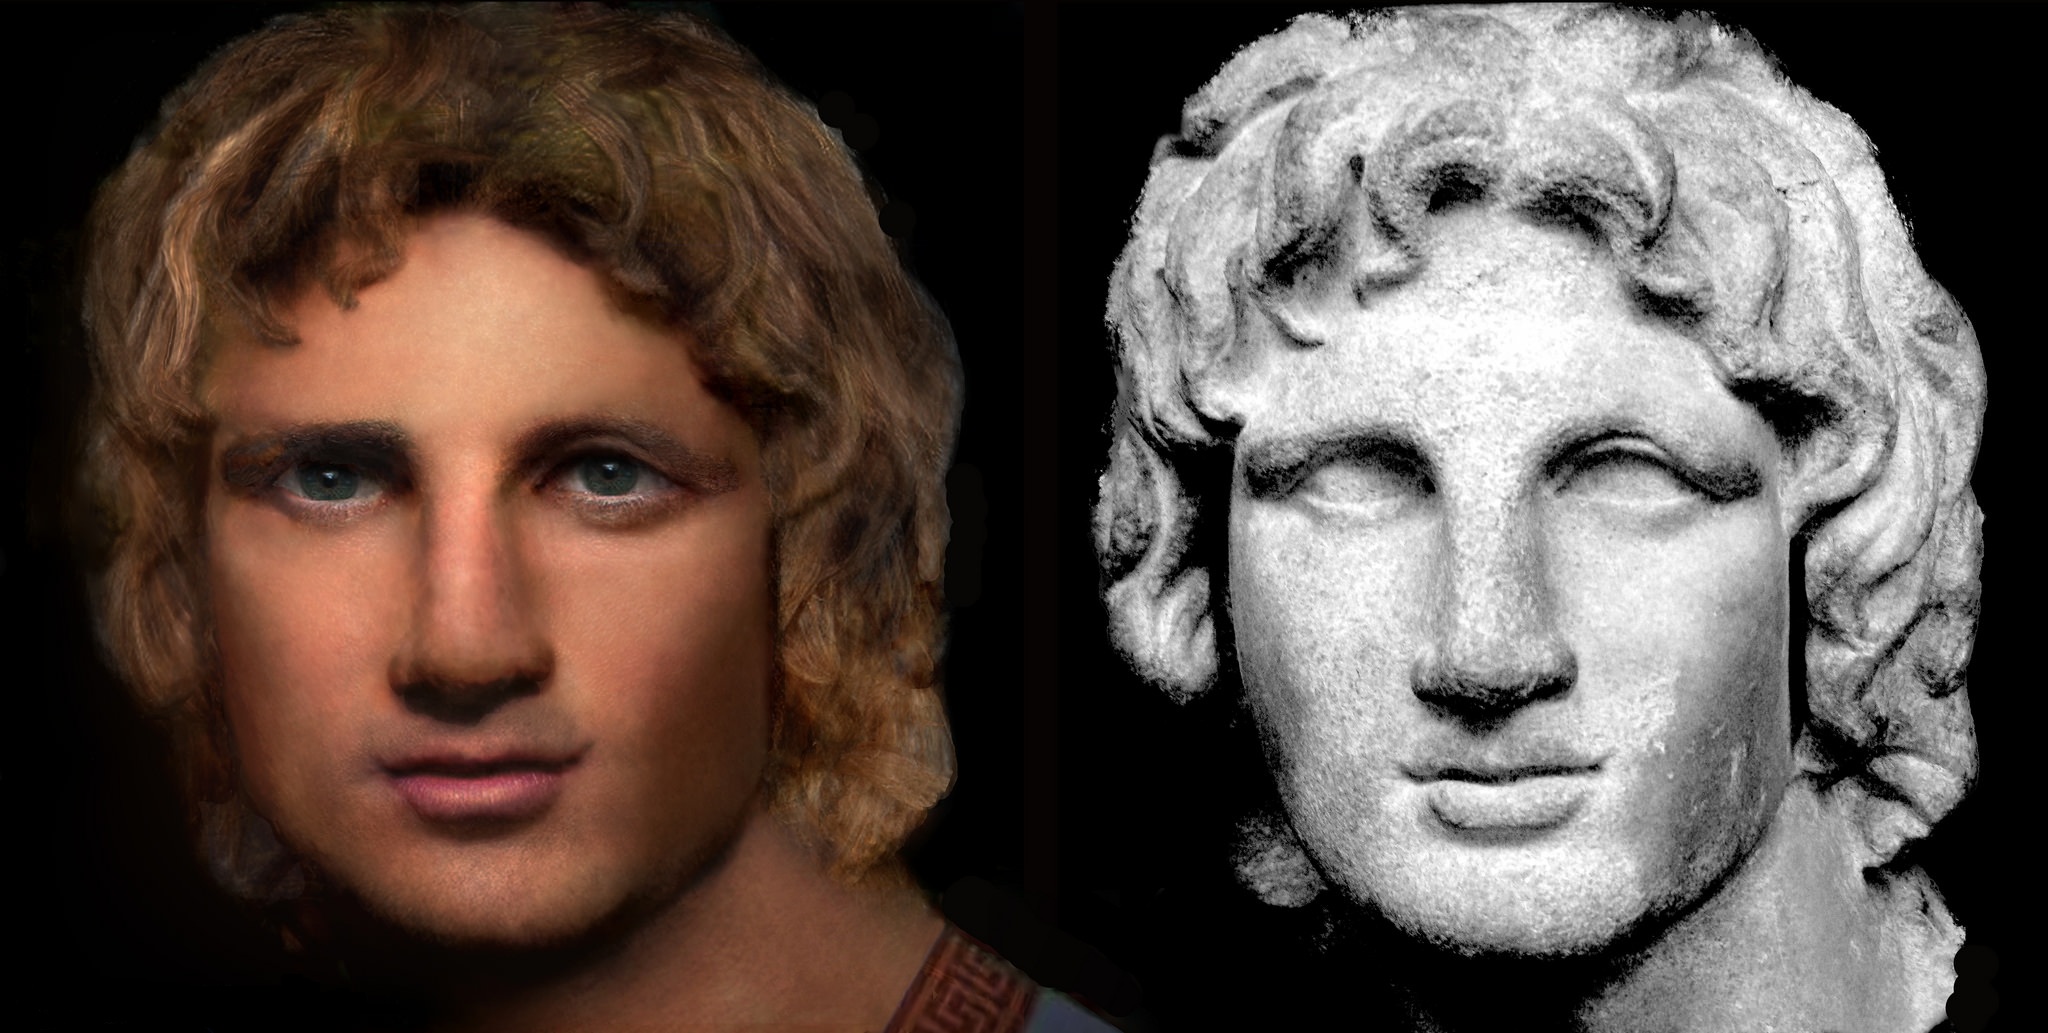 Alexander the greats facial feature